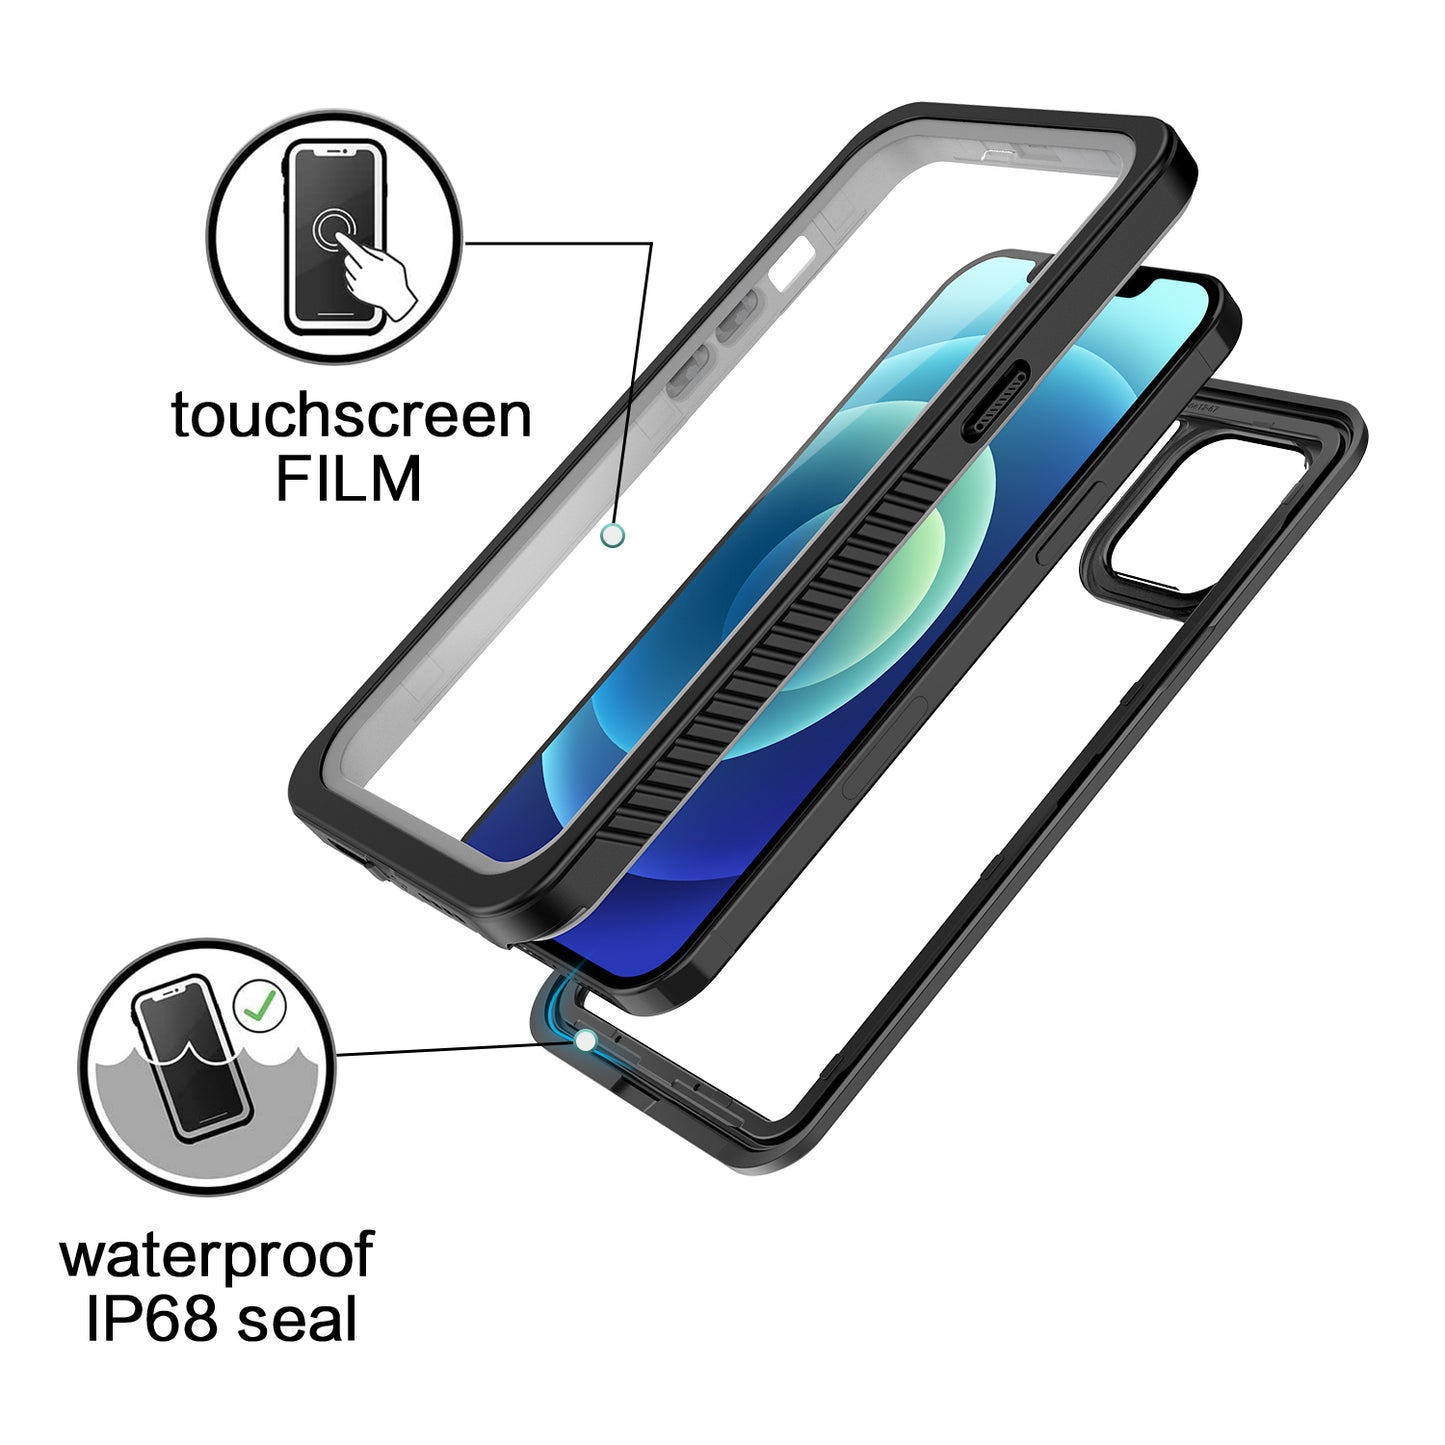 OAKTREE iPhone 12 Pro Max Shockproof Waterproof Full-Body Rugged Case - Black/Clear